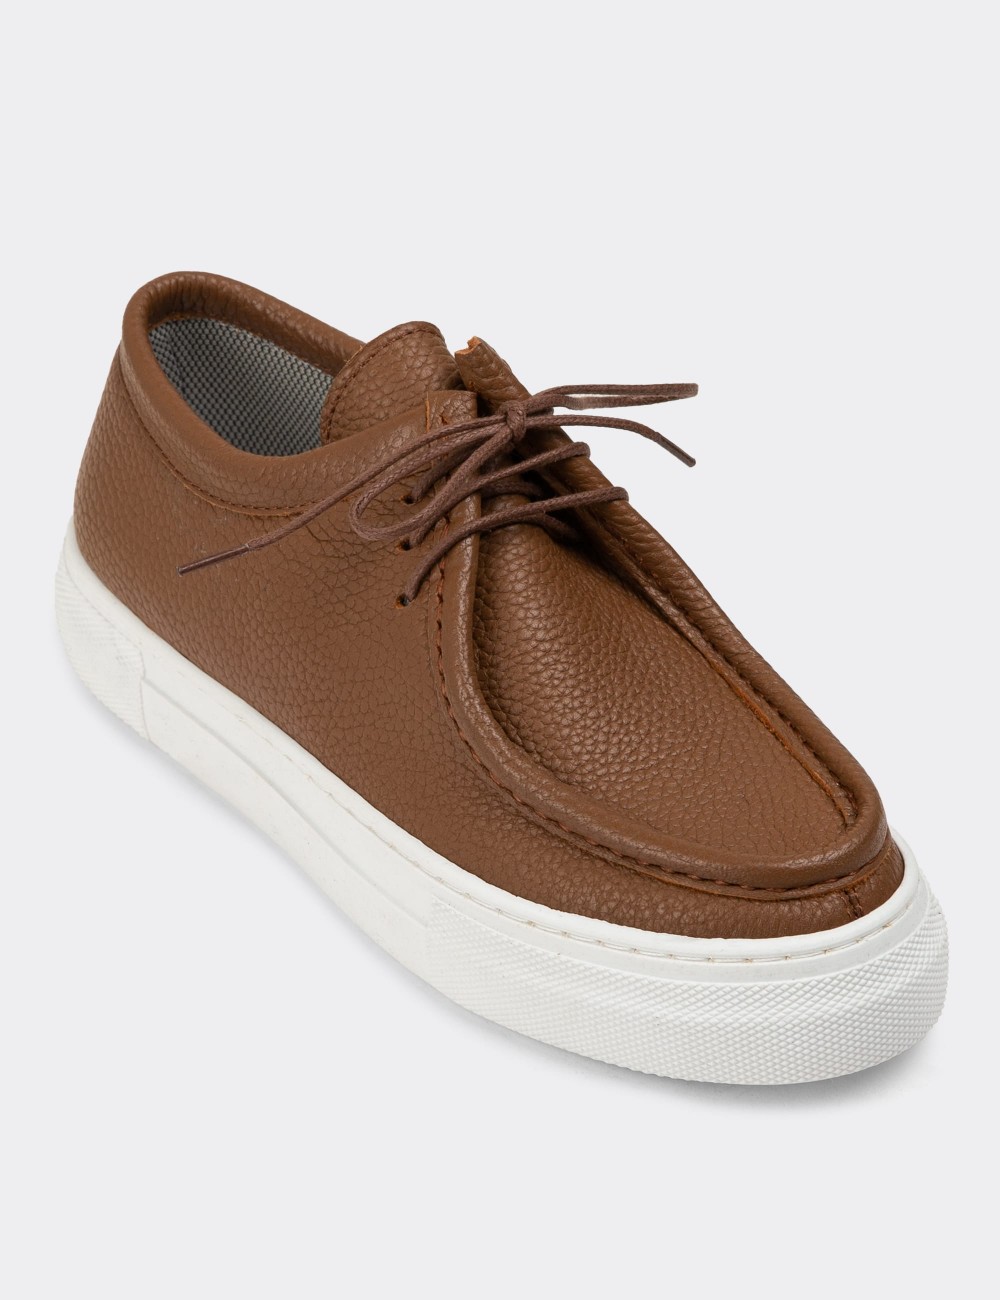 Tan Leather Sneakers - Z1682ZTBAC01